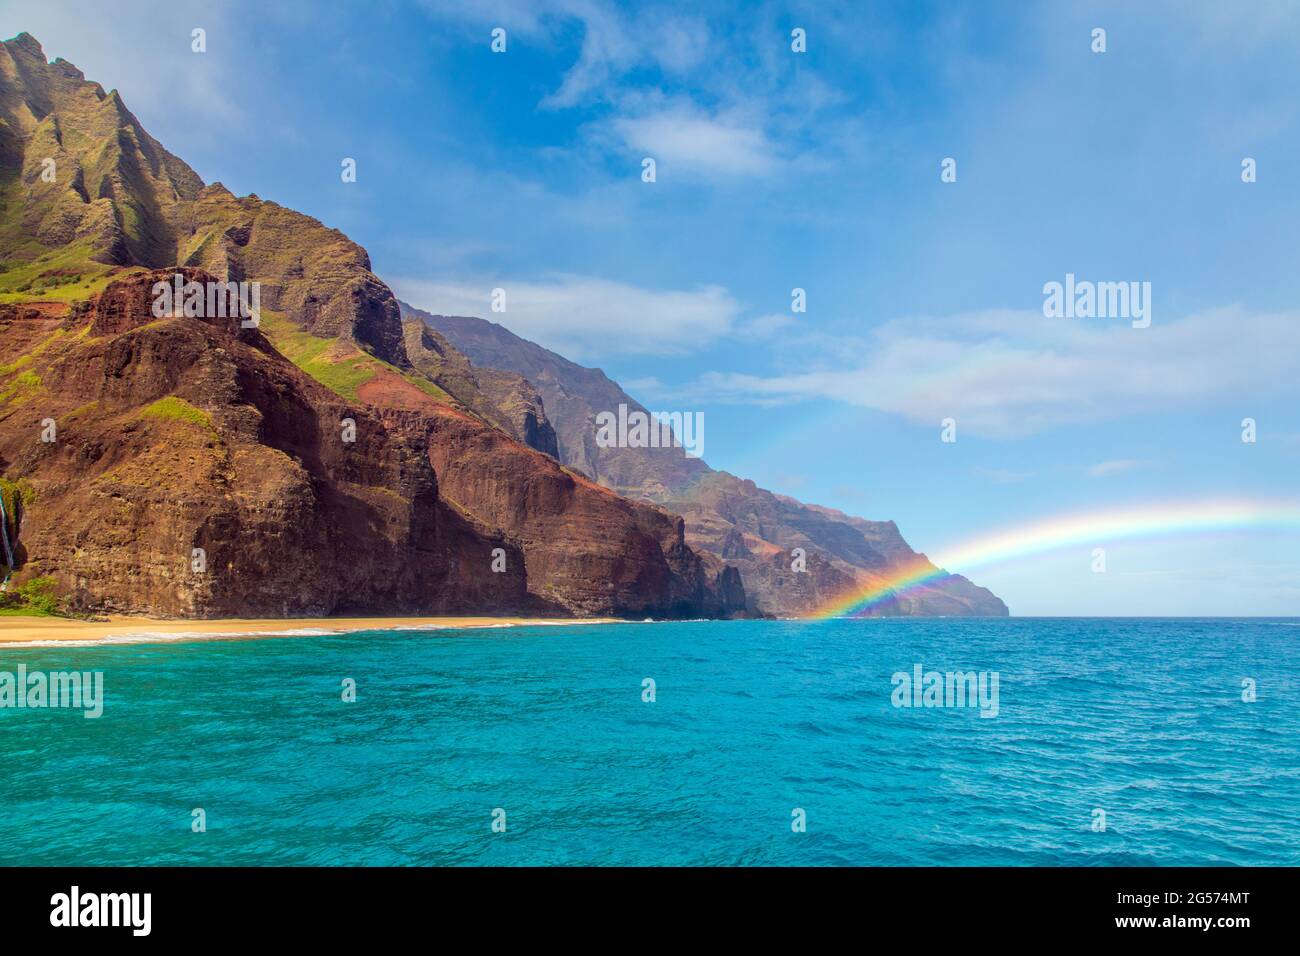 View of a rainbow off of Kauai's rugged Nā Pali Coast, where Kauai's rugged, remote coastline meets the Pacific Ocean Stock Photo